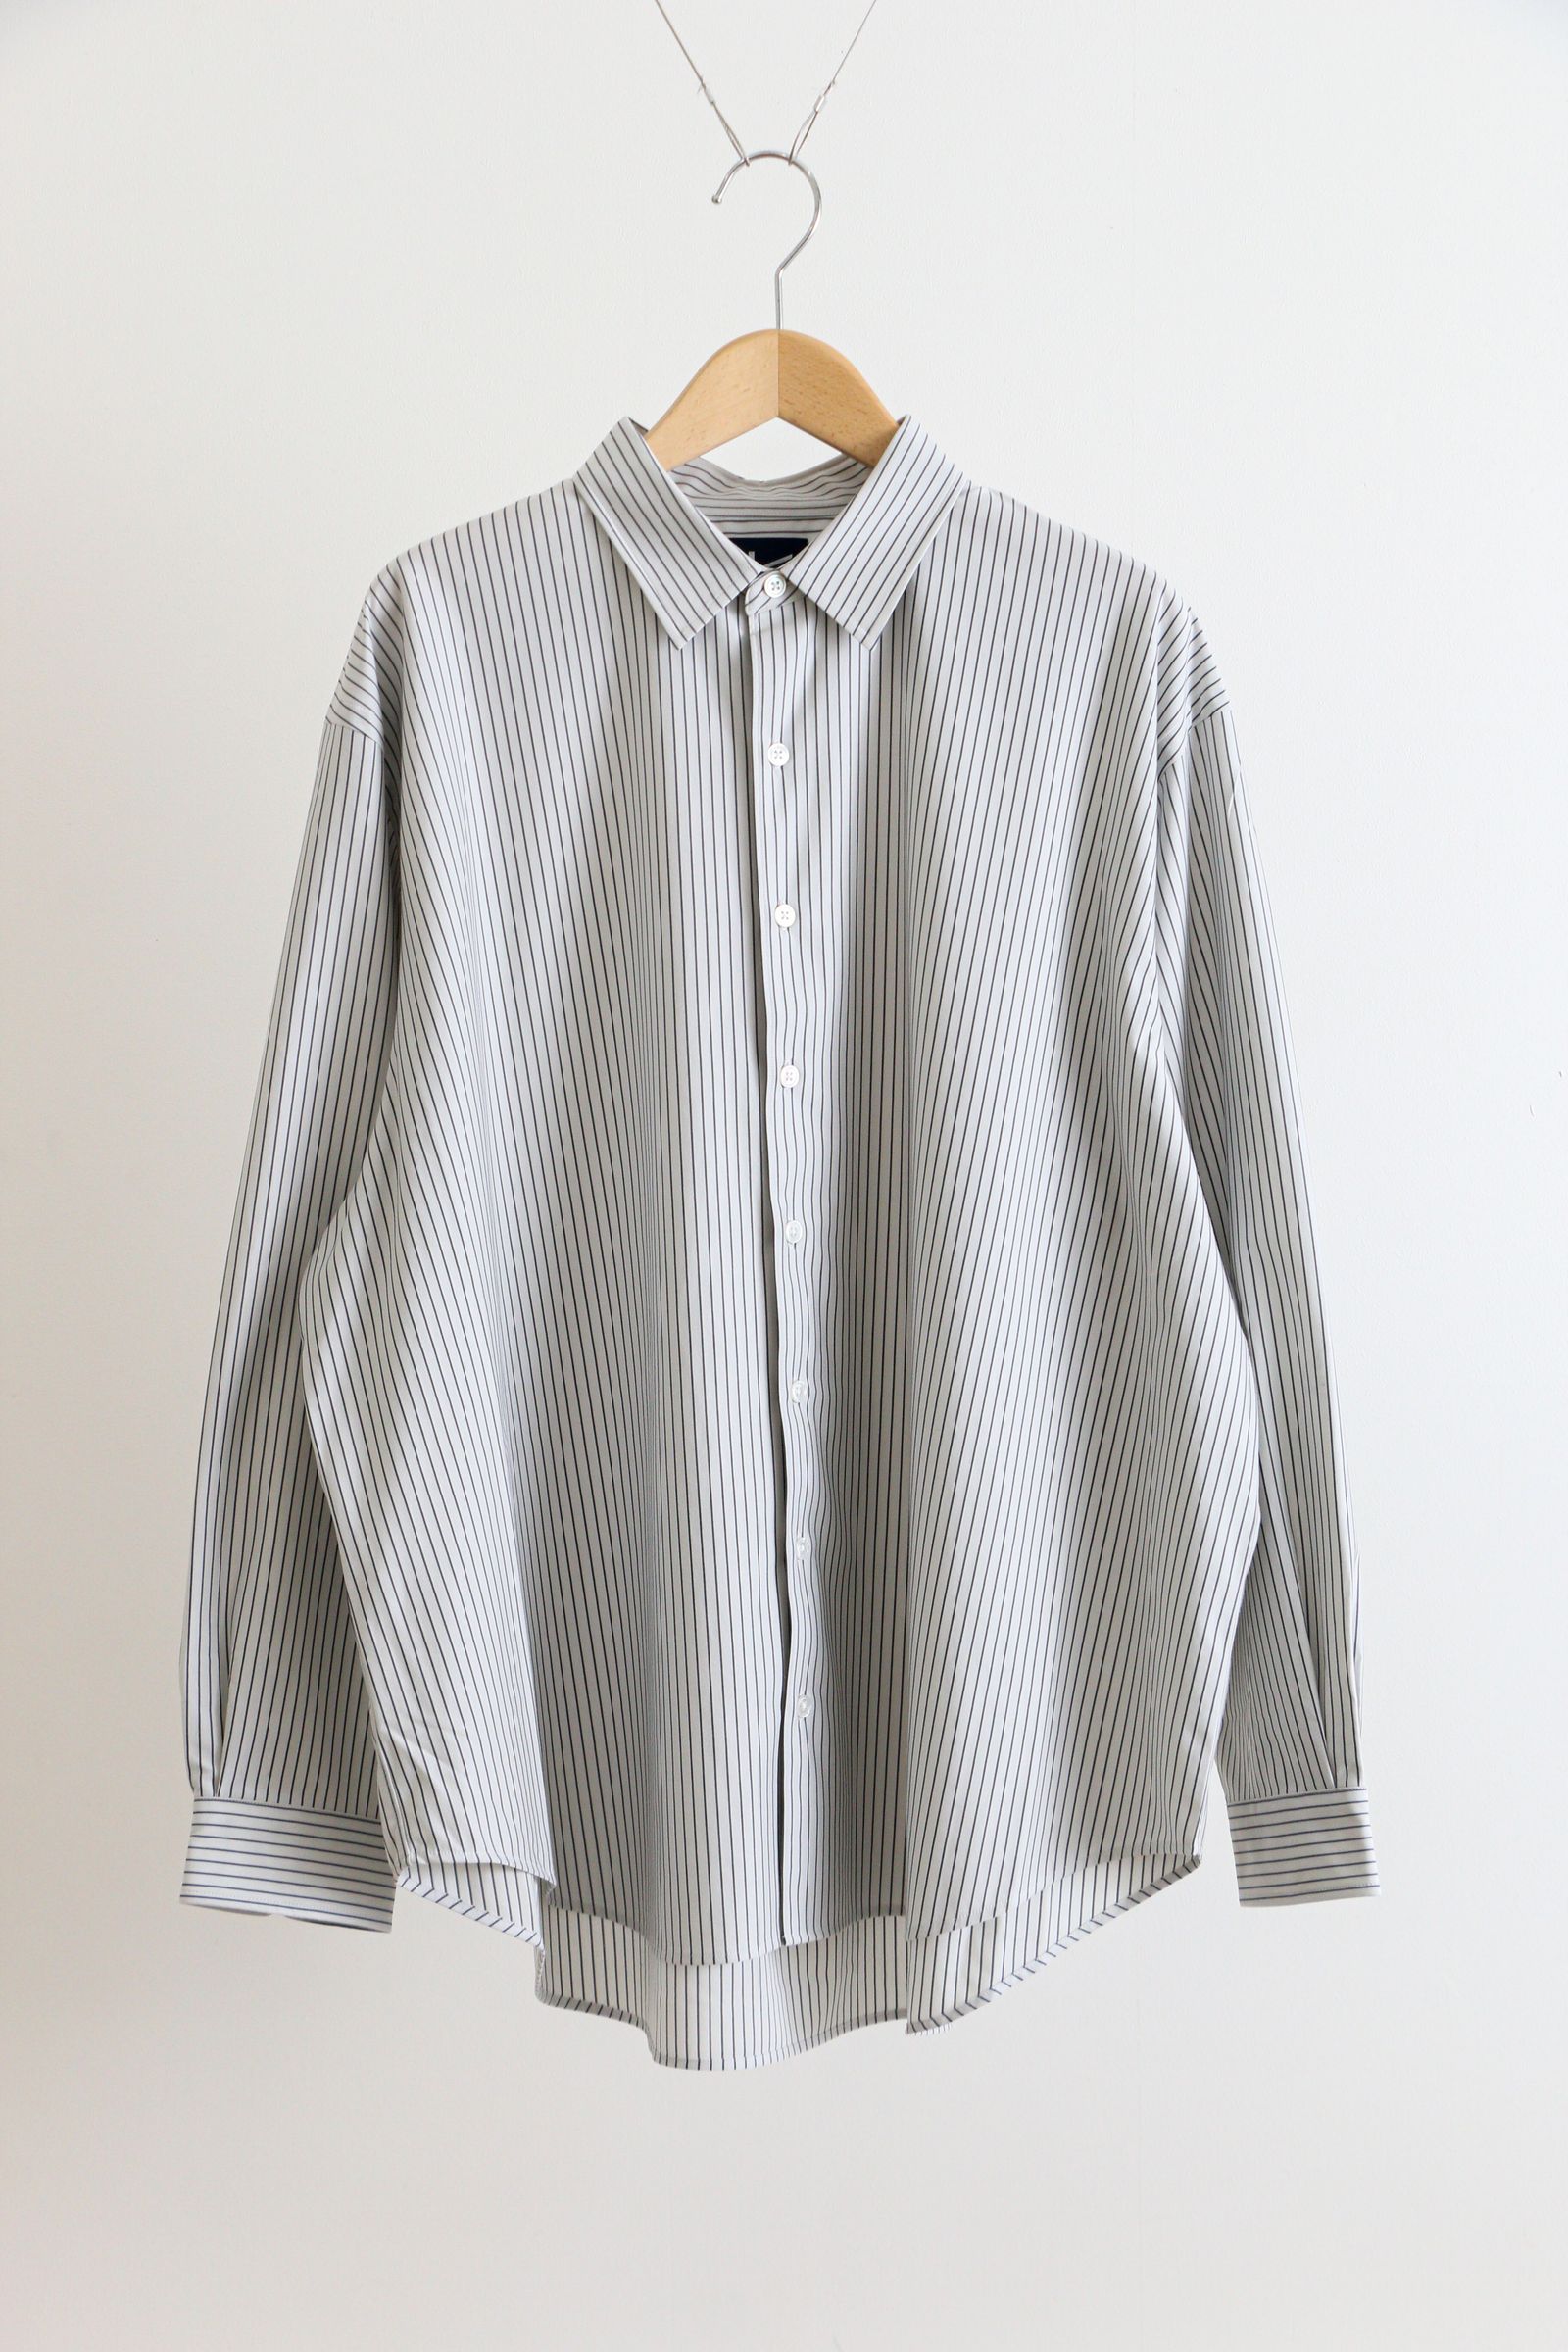 KANEMASA PHIL. - Pencil Stripe Dress Jersey Shirt / BL SP 